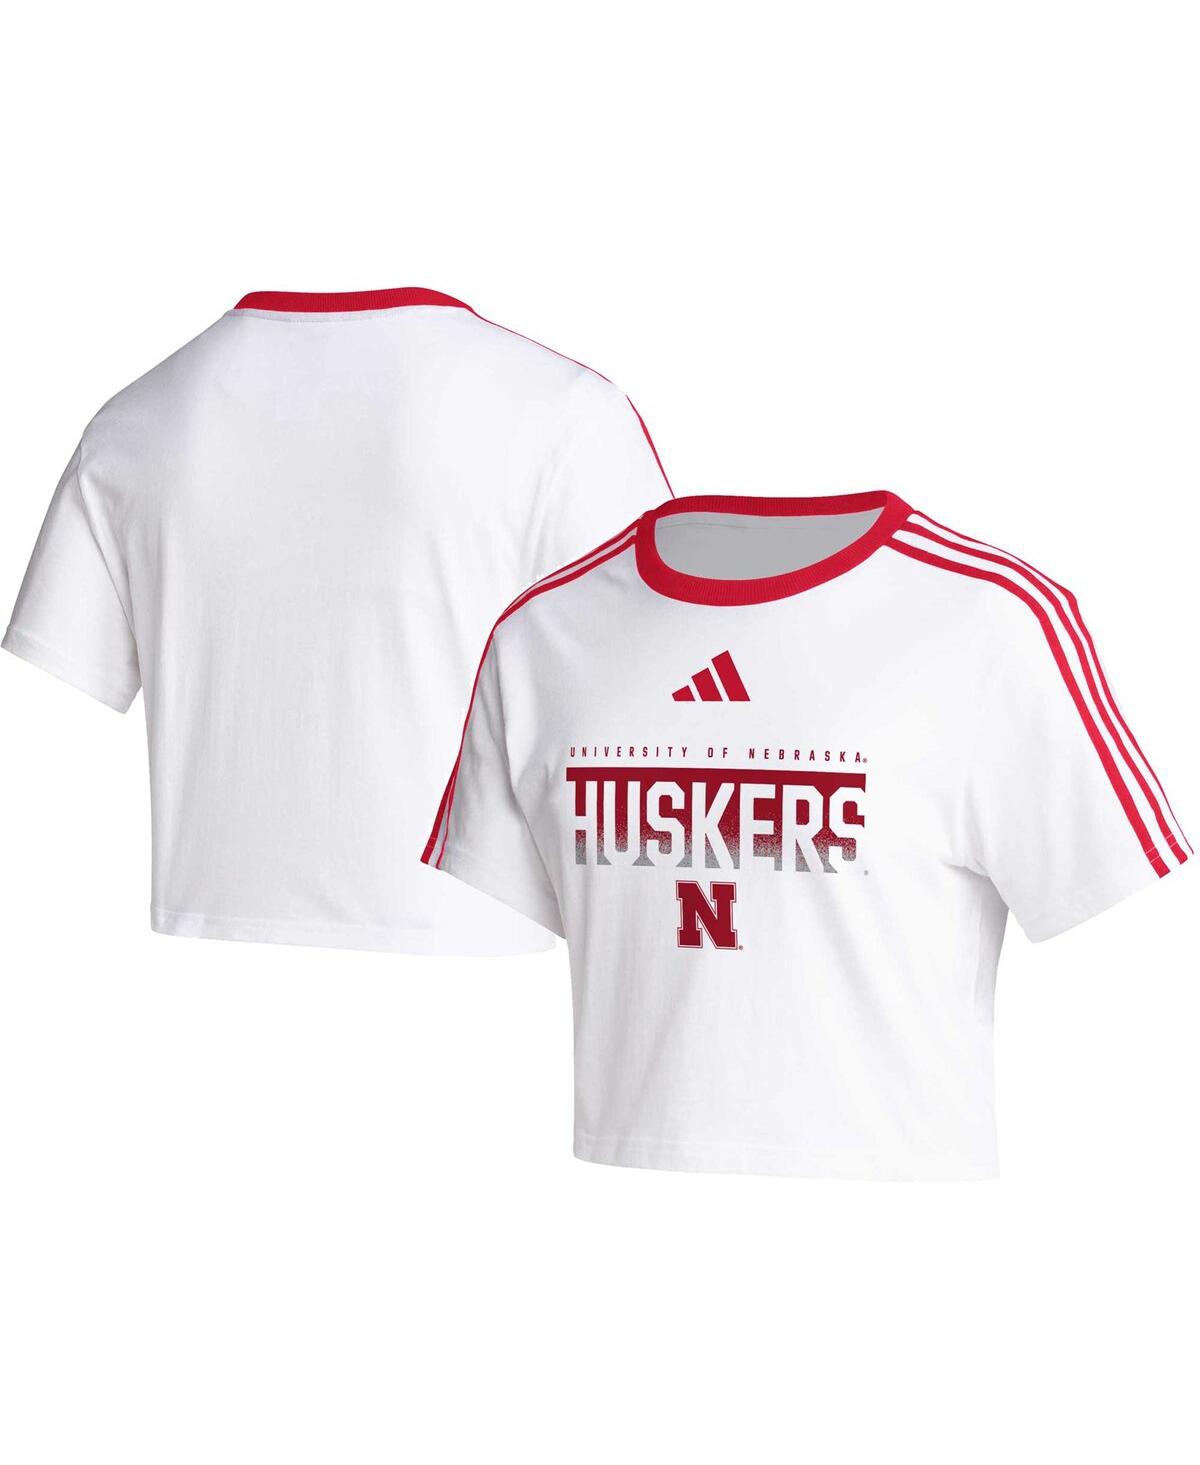 Women's adidas White Nebraska Huskers Three-Stripes Cropped T-shirt - White